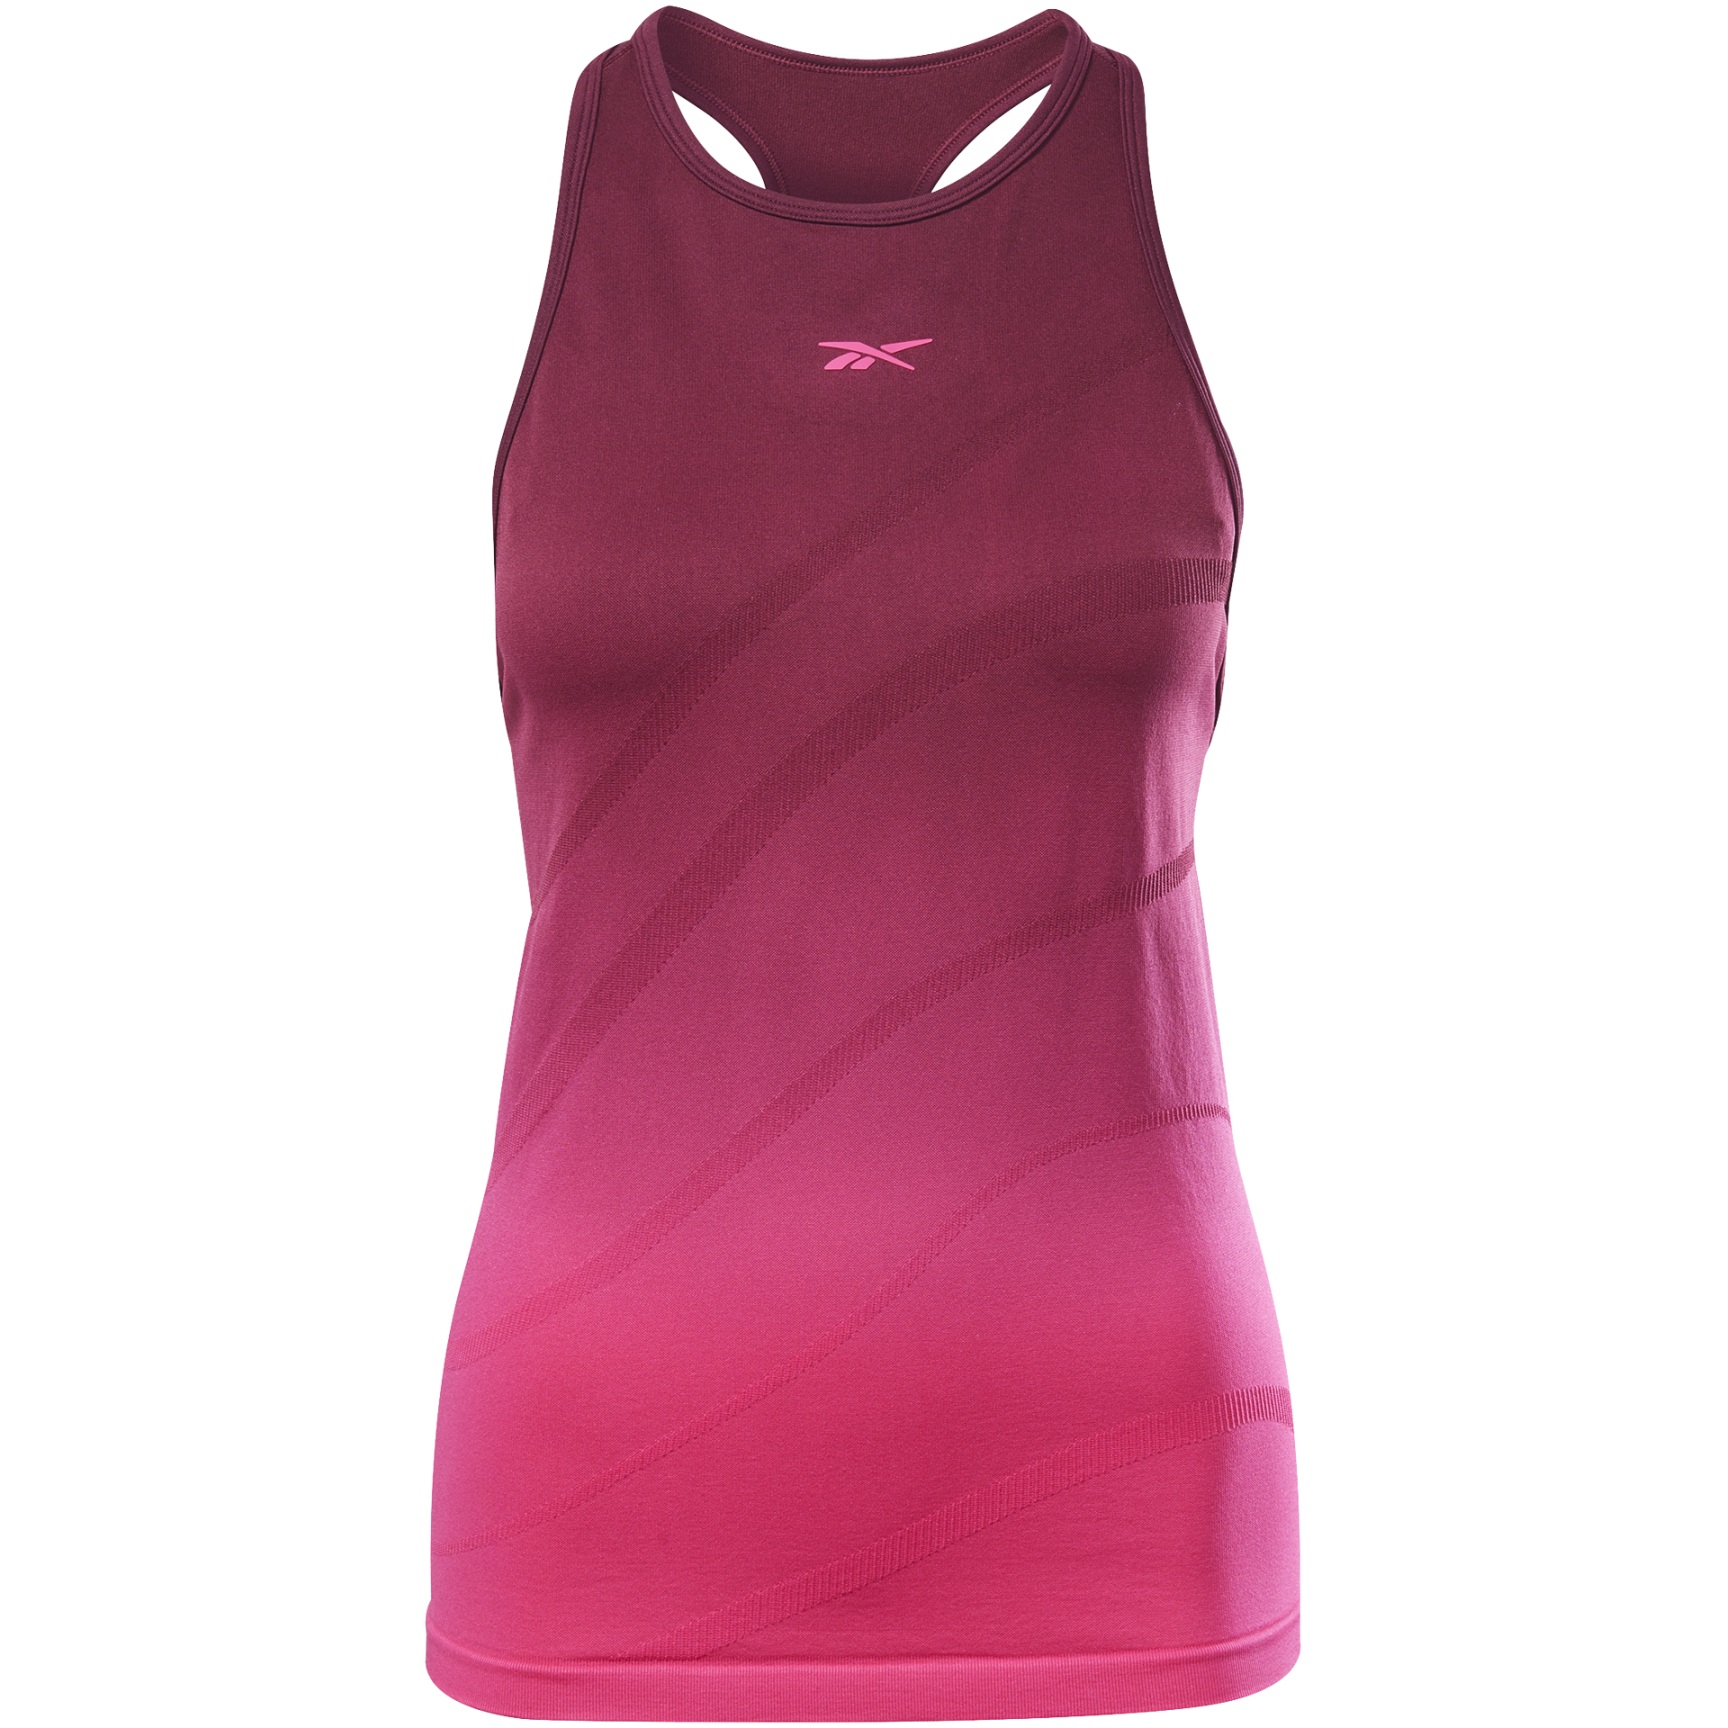 Foto de Reebok United By Fitness Seamless Camiseta sin Mangas para Mujer - maroon/pursuit pink